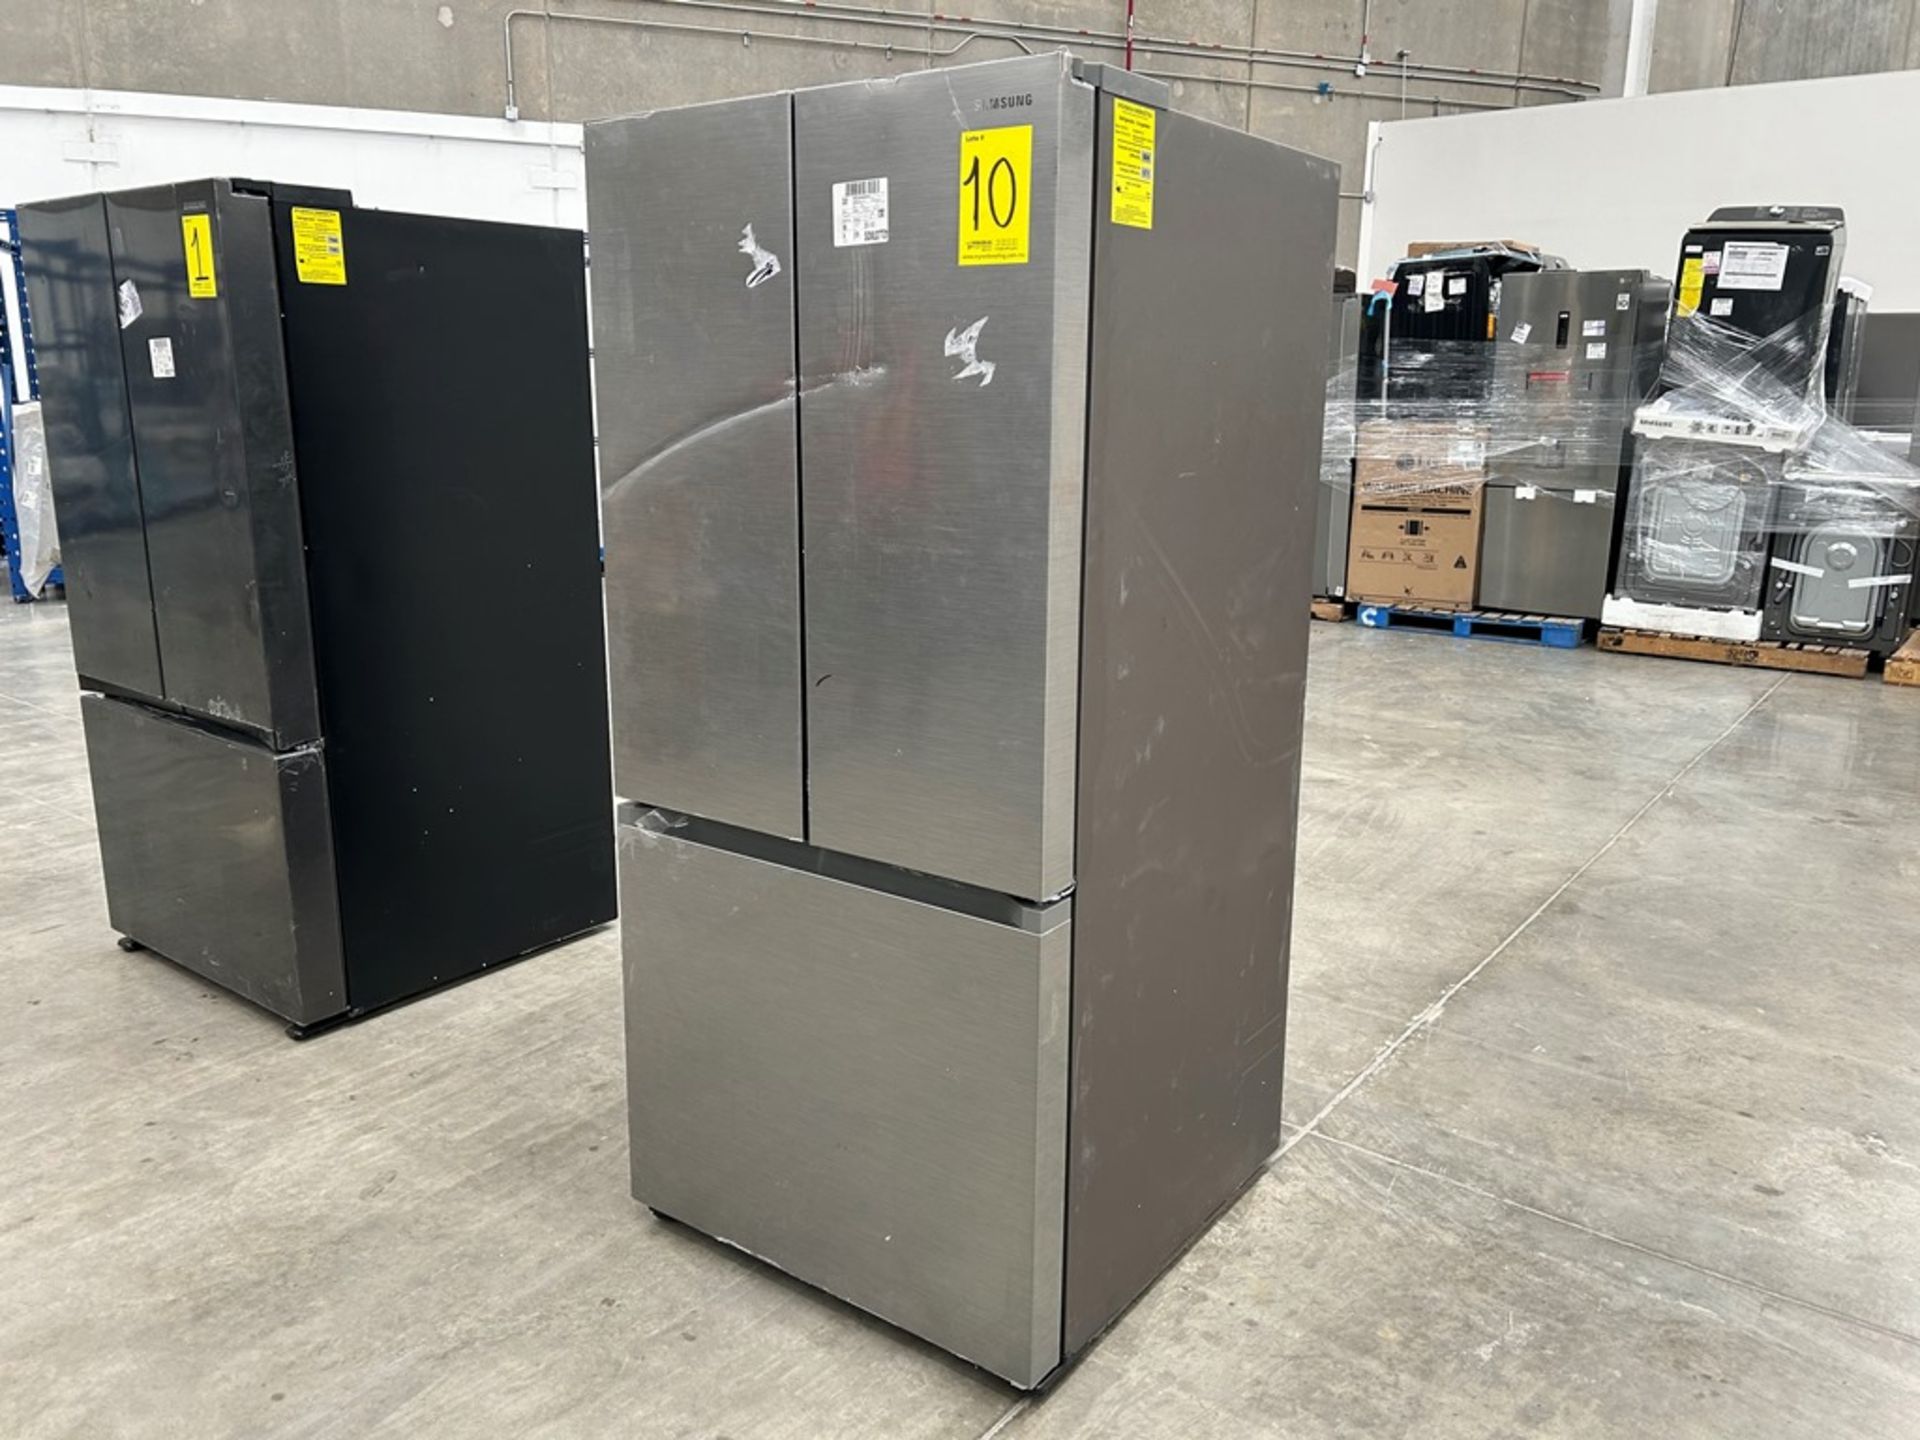 1 refrigerador Marca SAMSUNG, Modelo RF25C5151S9, Serie 0089E, Color GRIS (No se asegura su funcion - Image 2 of 5